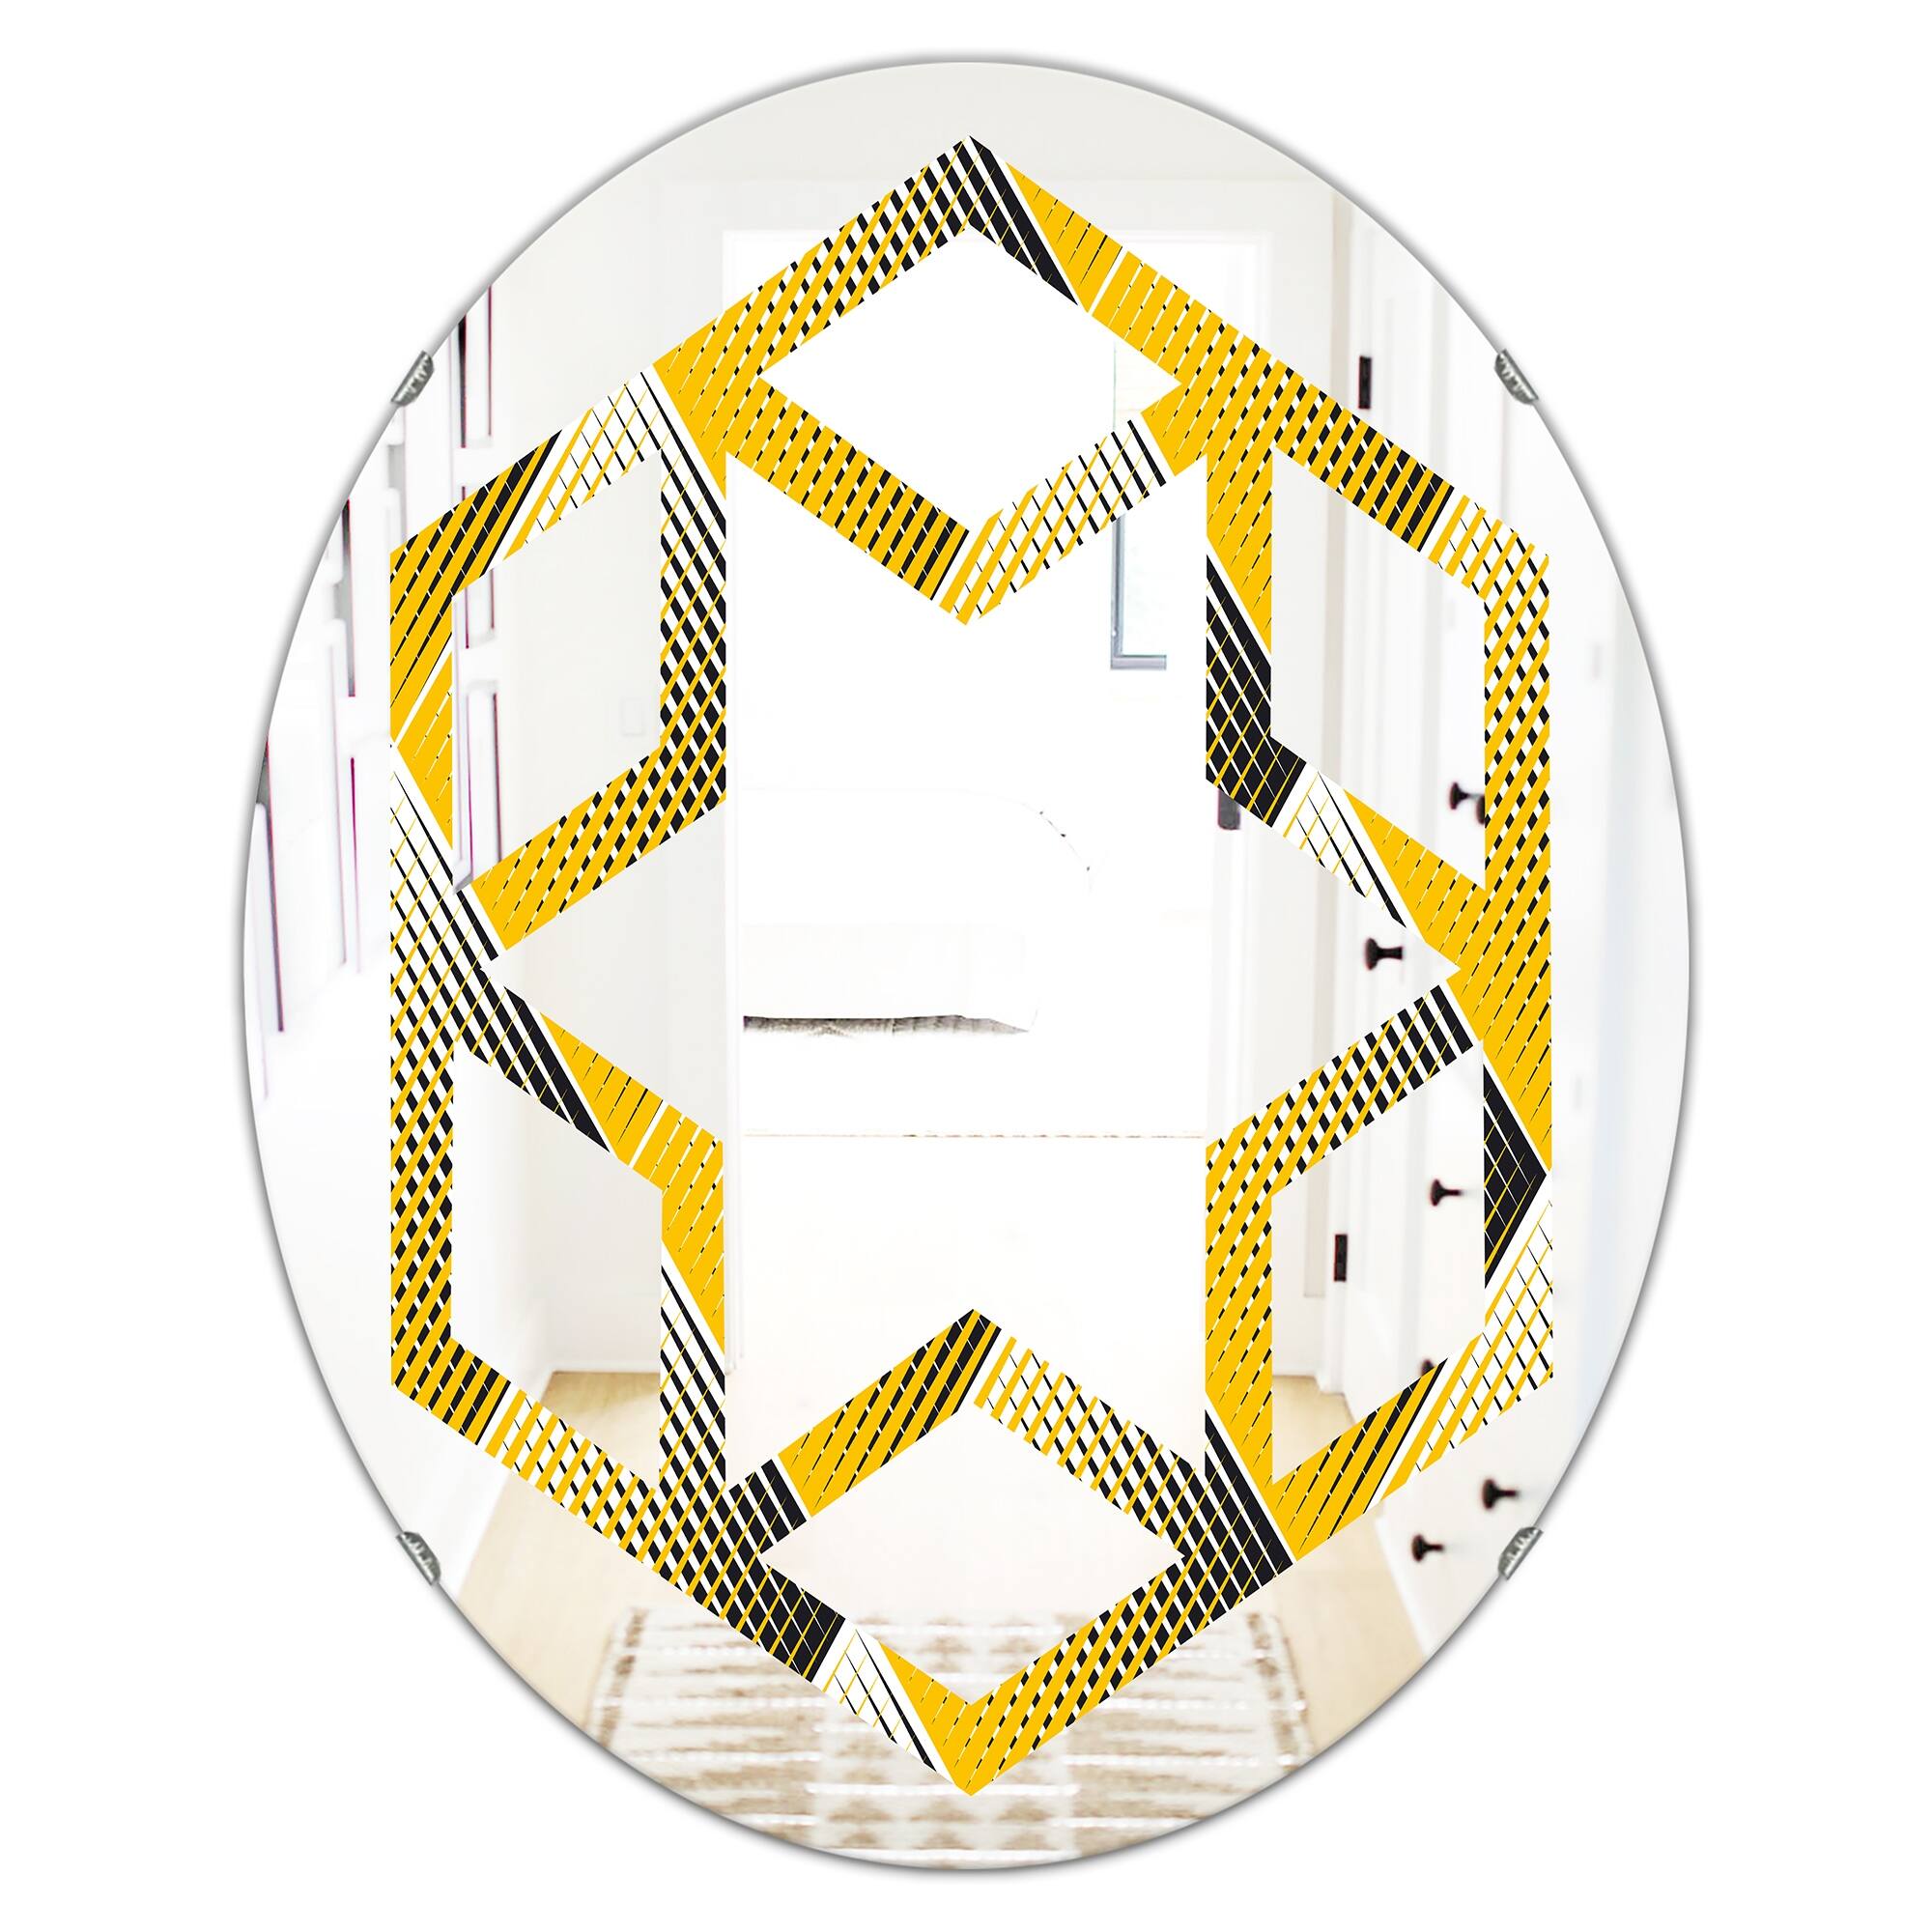 Designart 'Rhombus Retro Geometric' Printed Modern Round or Oval Wall ...